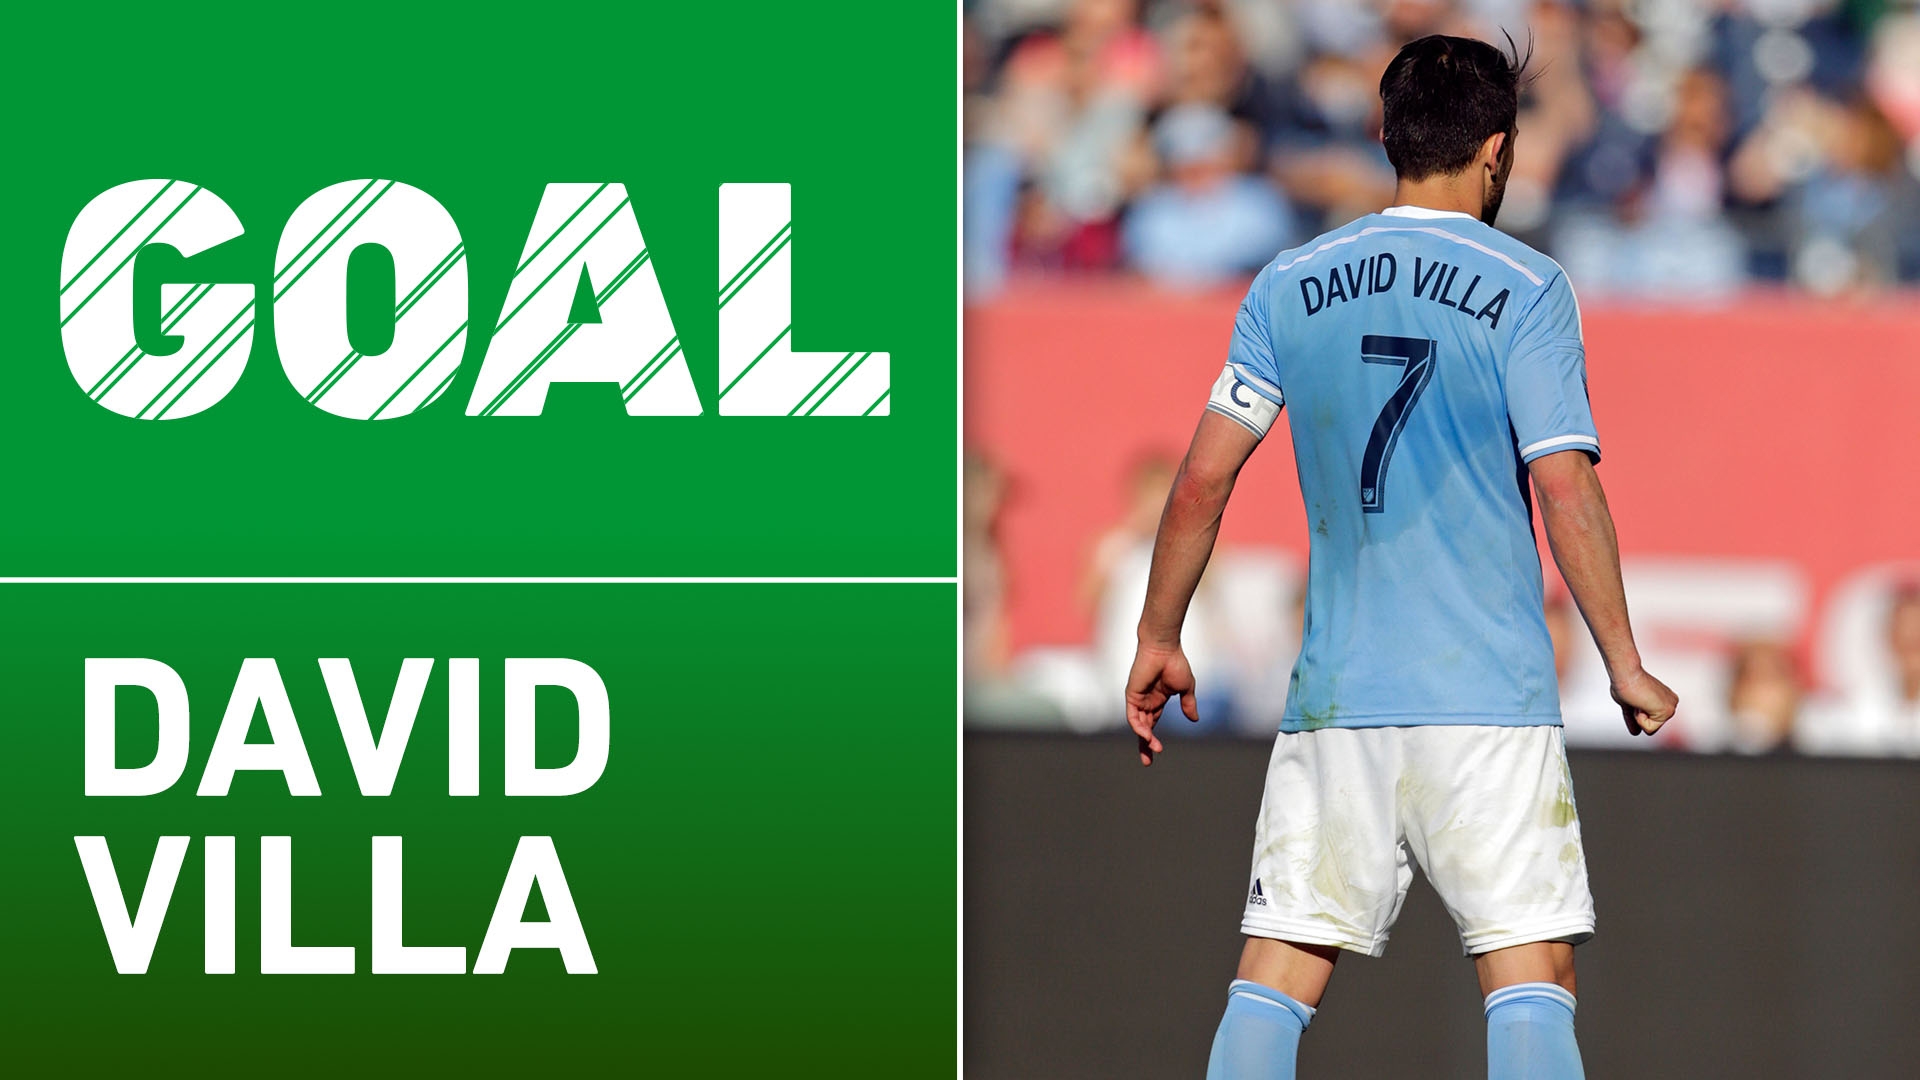 Video via MLS: David Villa finishes a fine pass from RJ All